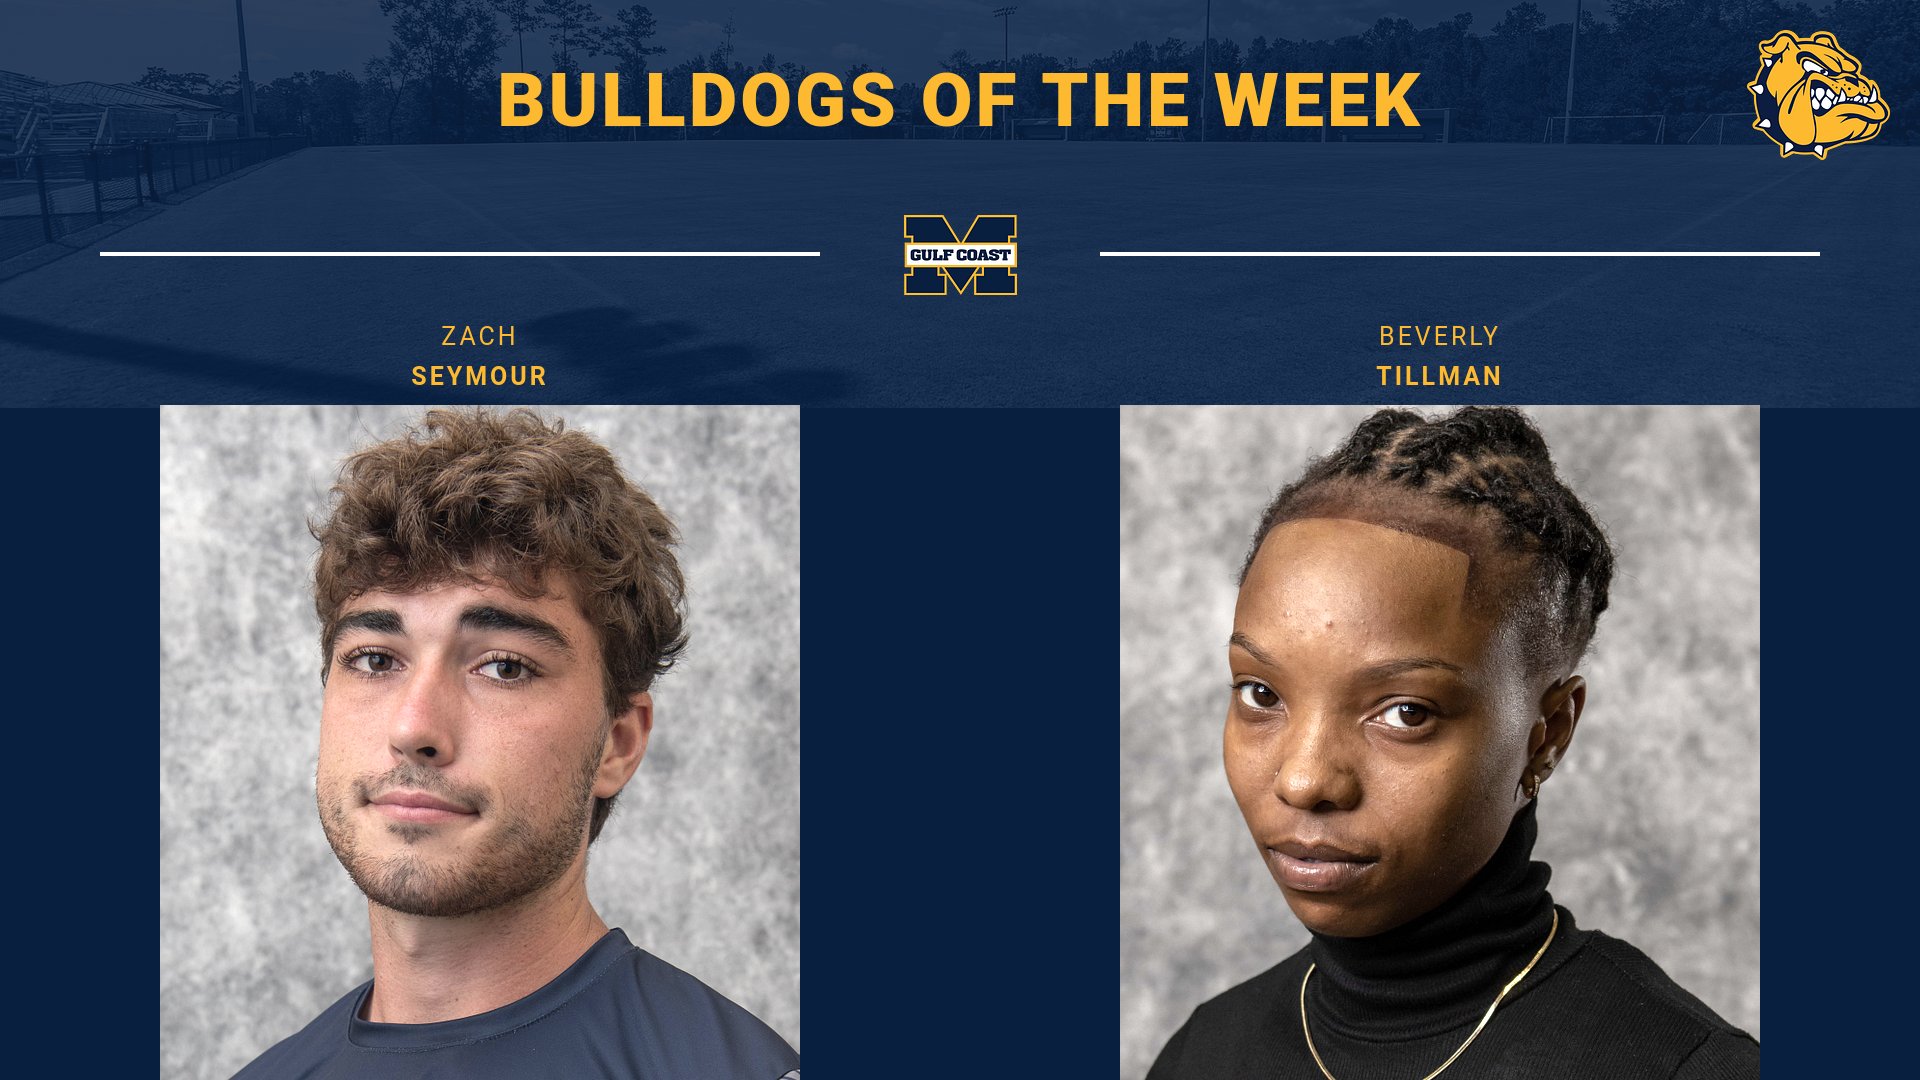 Seymour, Tillman named Bulldogs of the Week